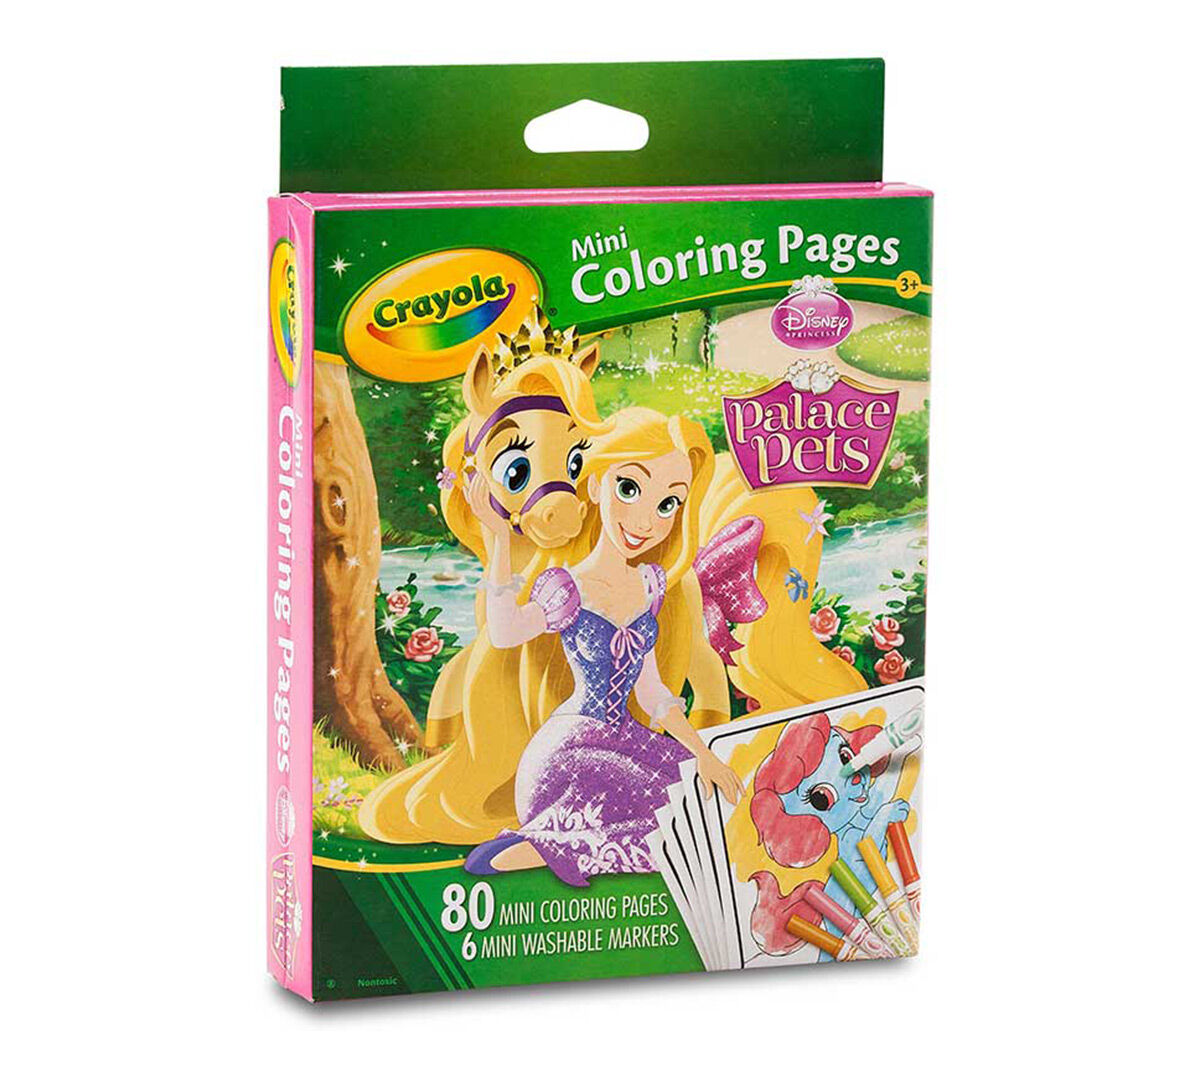 Mini Coloring Pages Disney Princess Palace Pets Crayola Mickey Mouse